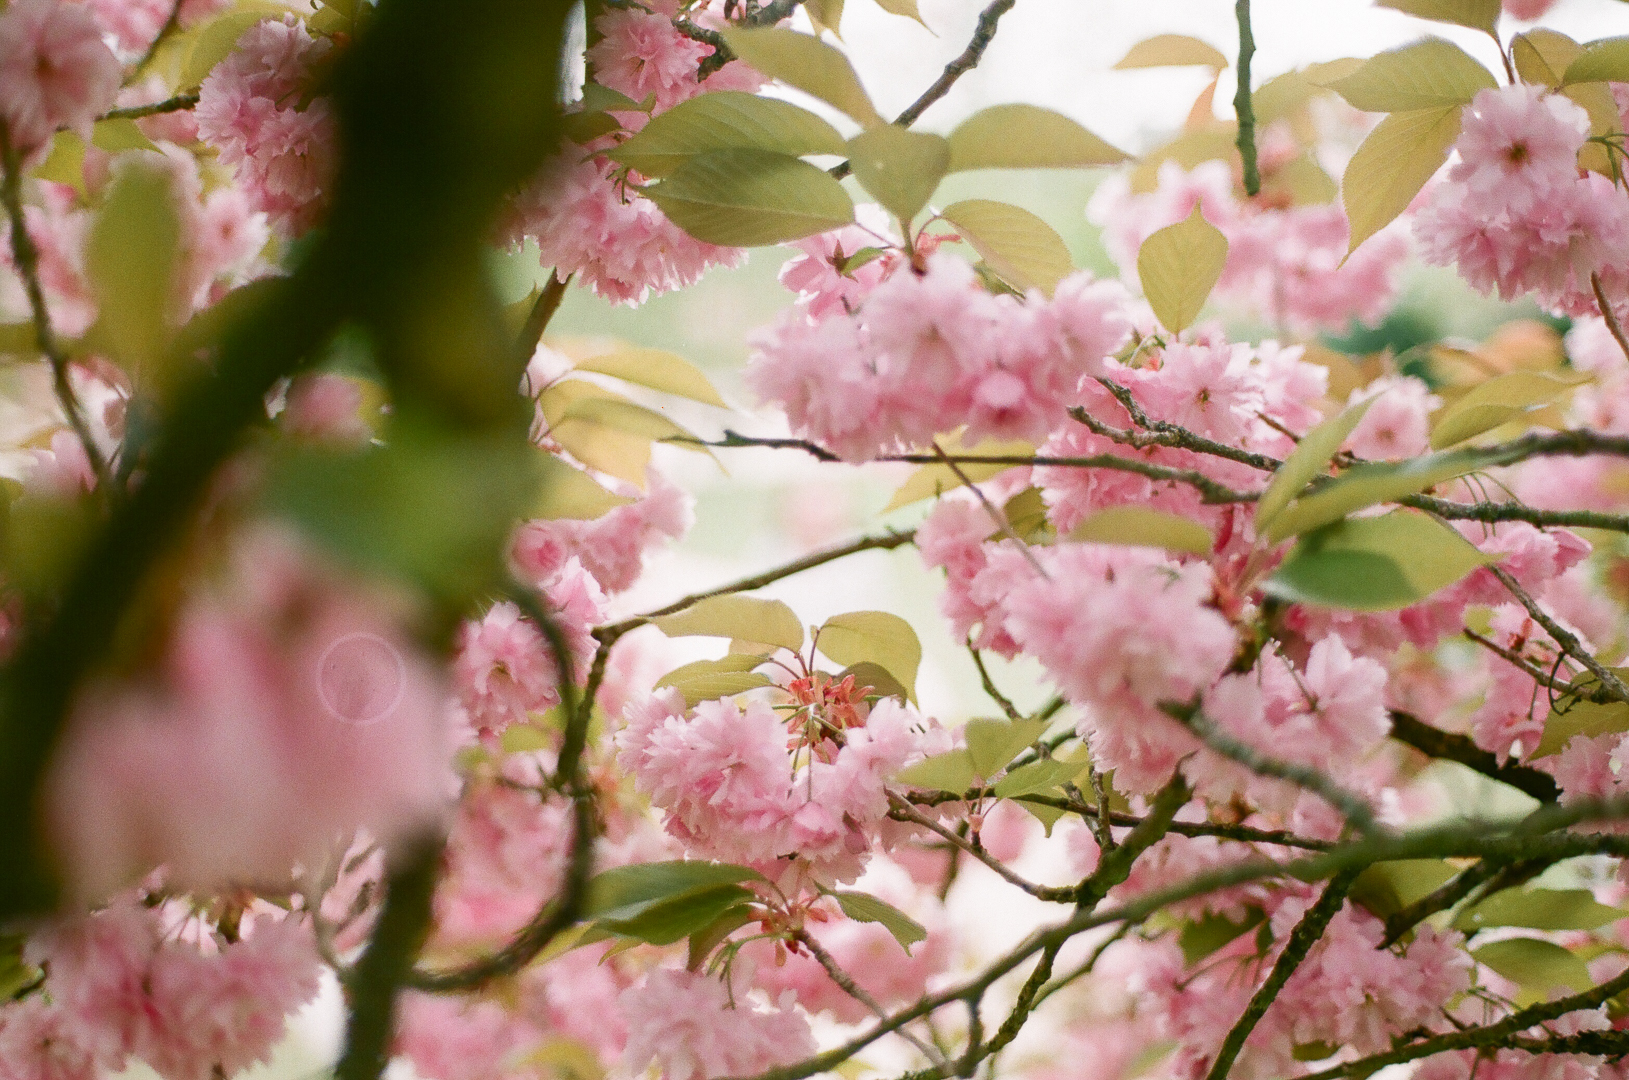 Spring through an analog lens